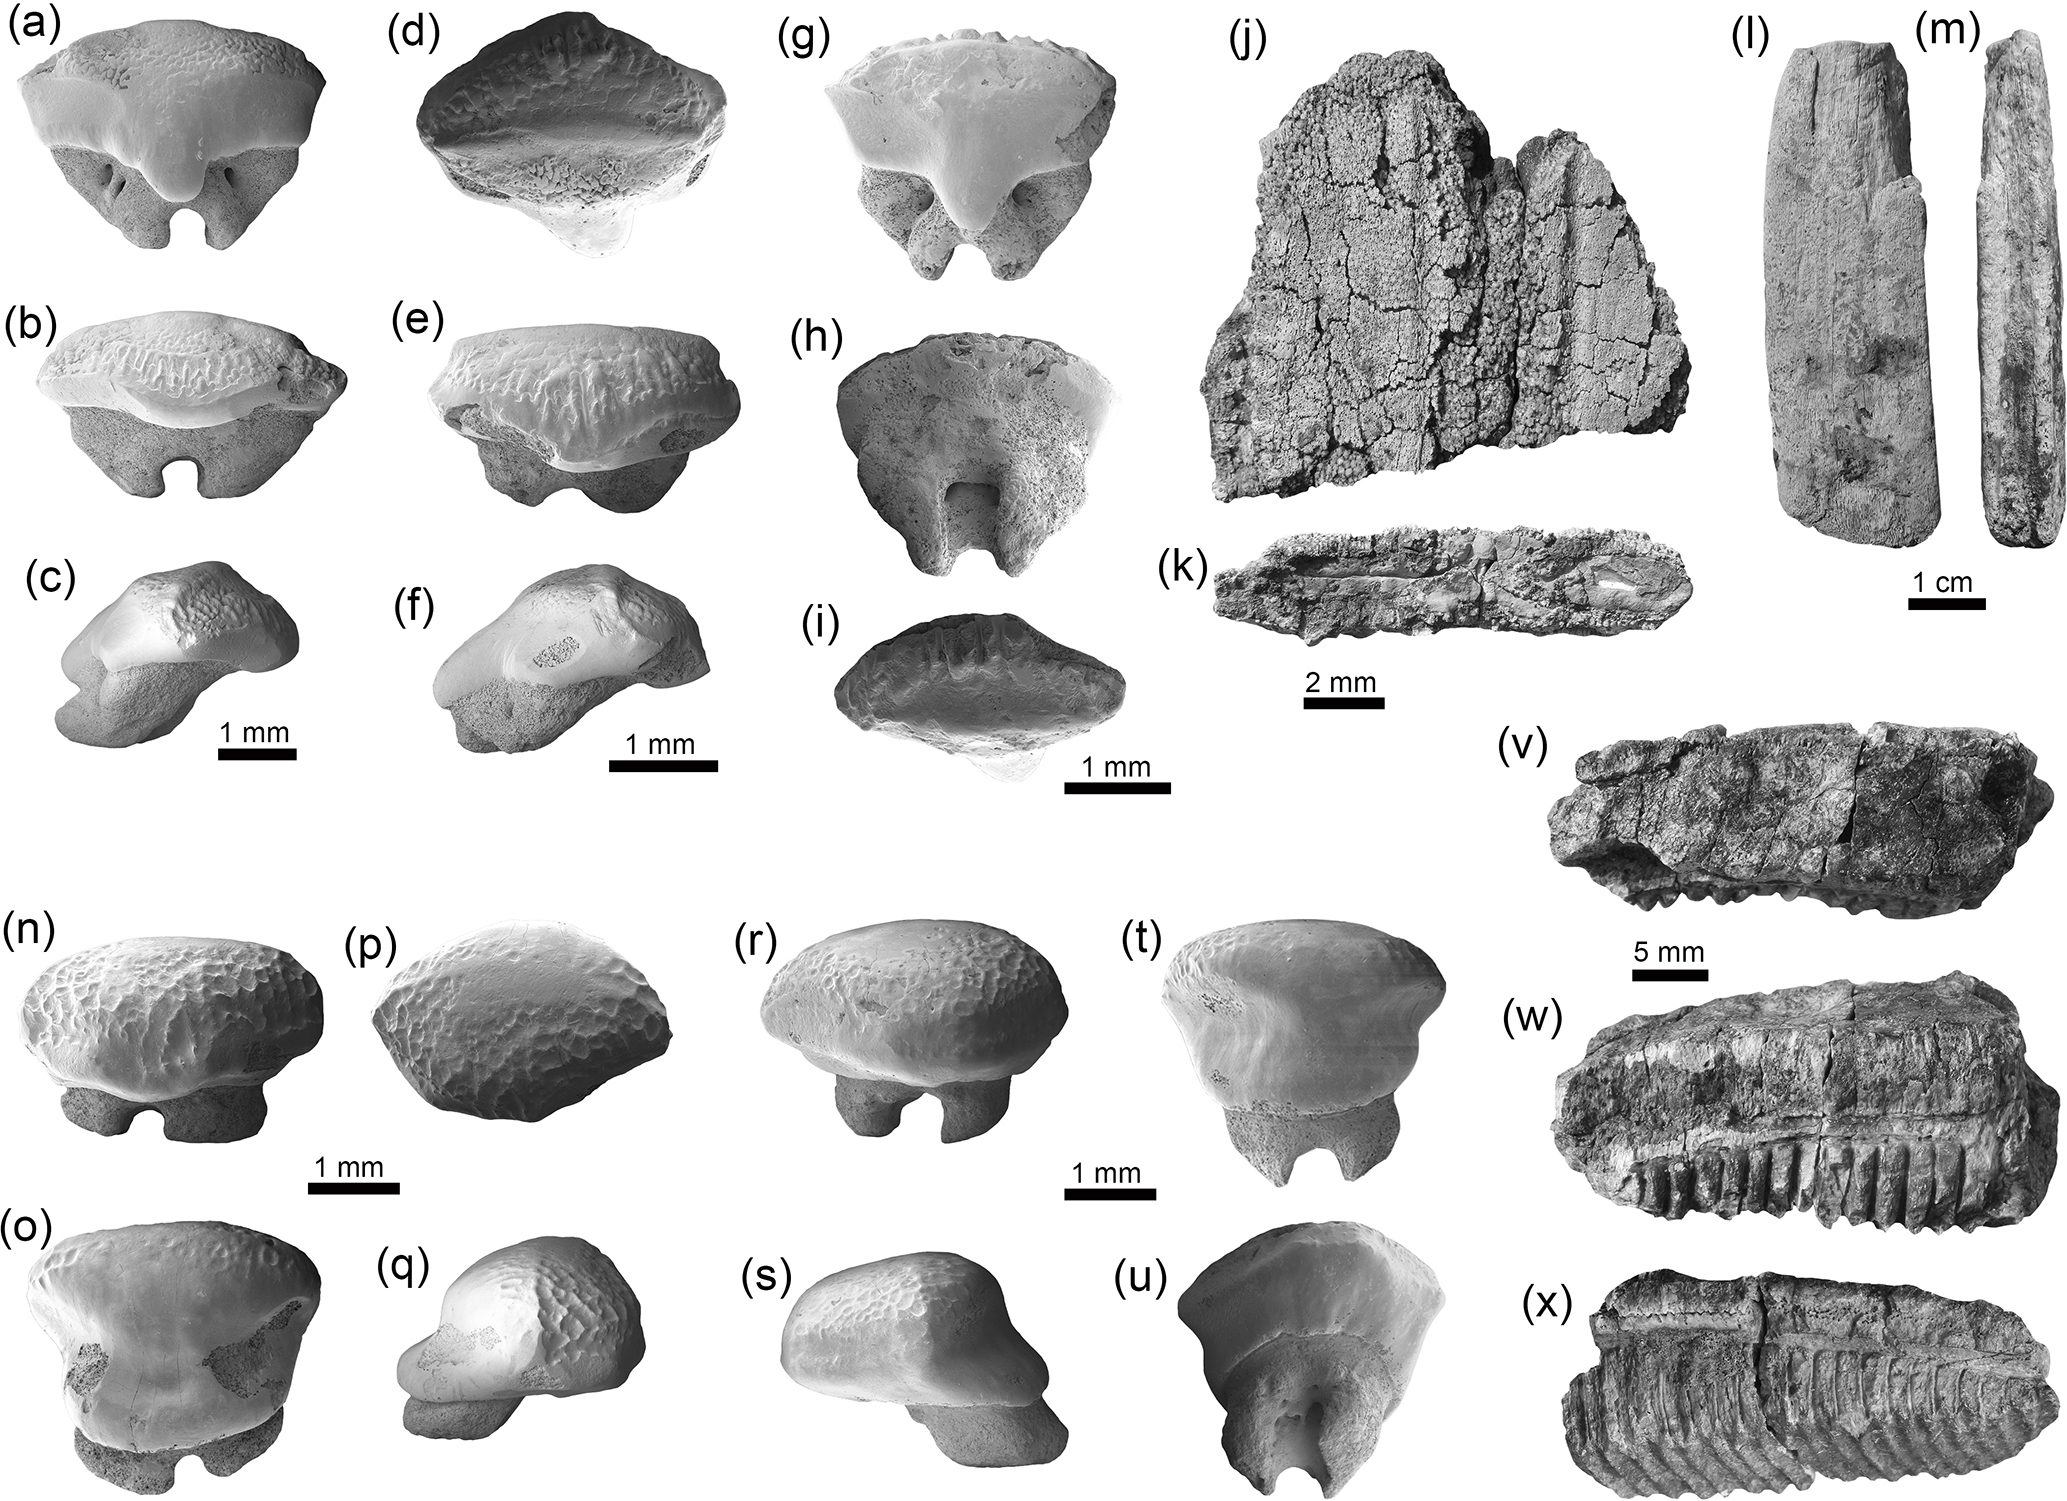 Bg Neogene Caribbean Elasmobranchs Diversity Paleoecology And Paleoenvironmental Significance Of The Cocinetas Basin Assemblage Guajira Peninsula Colombia